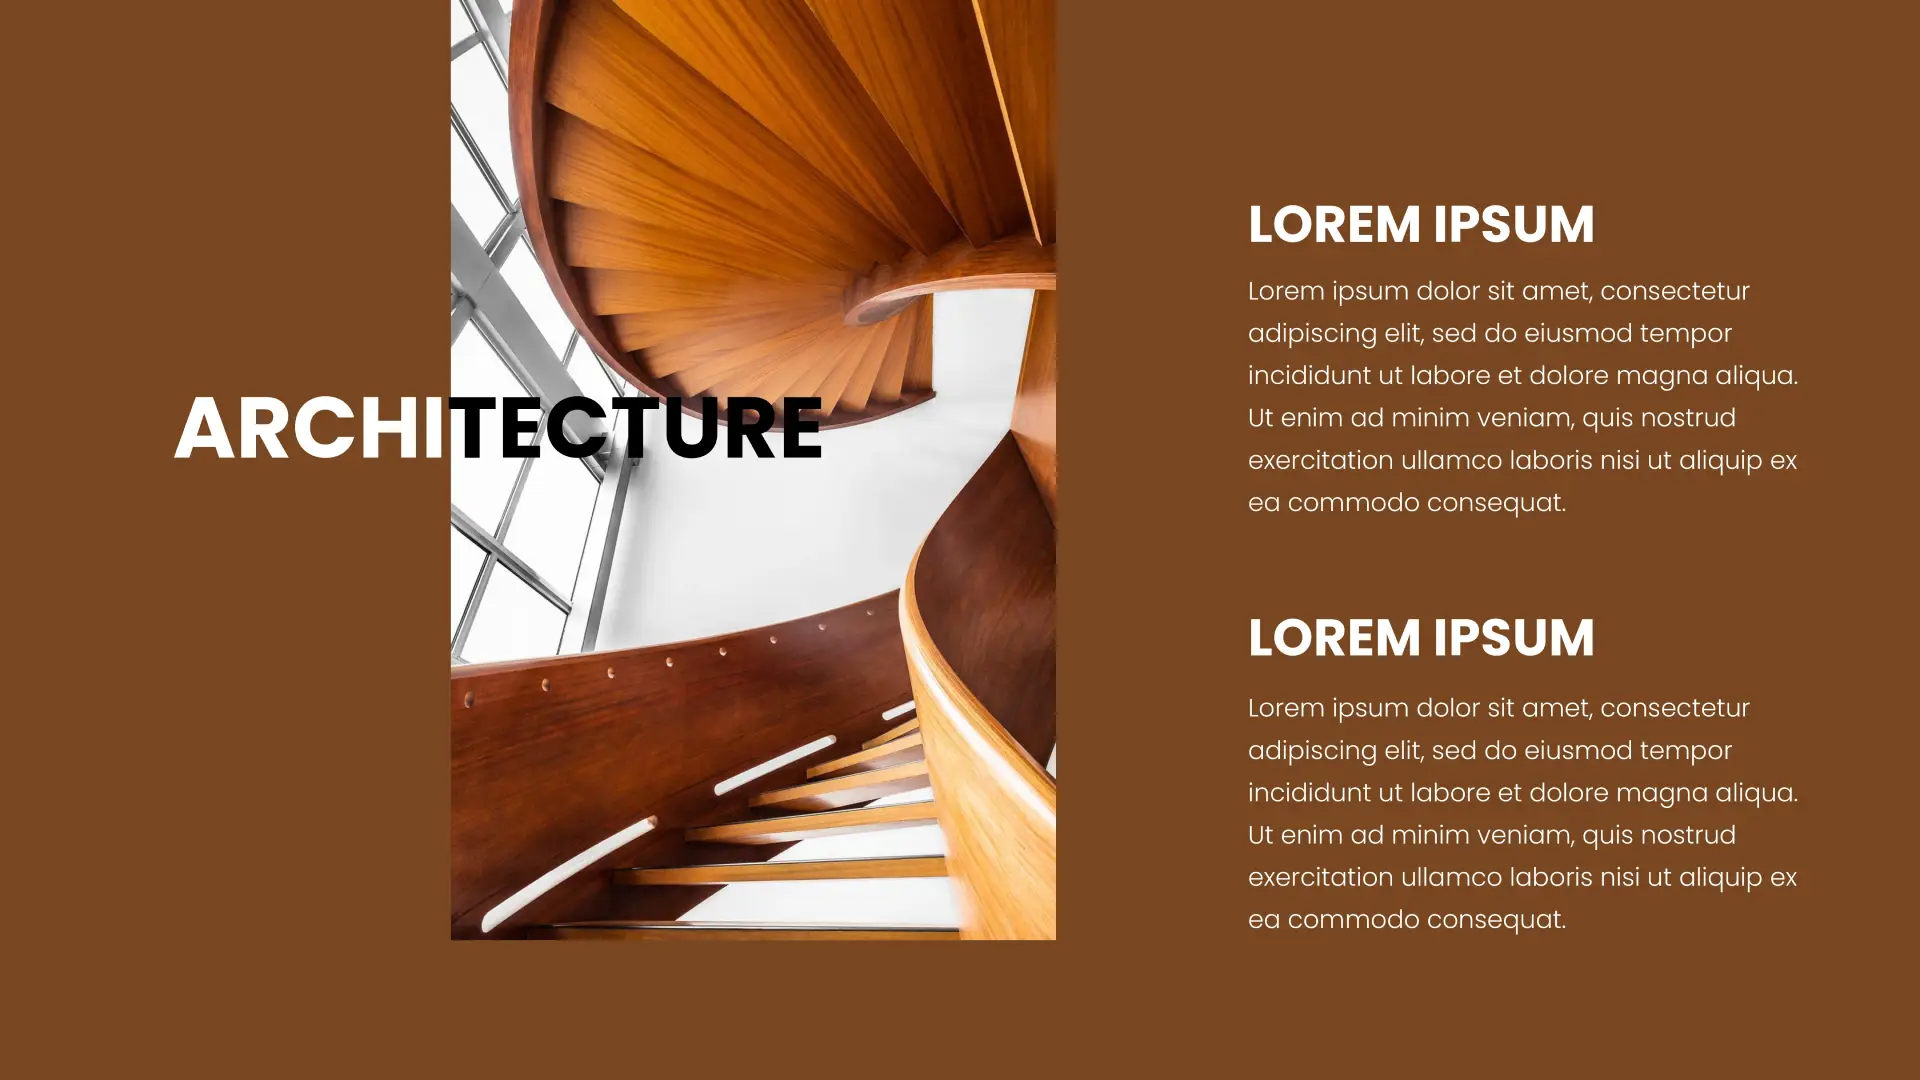 Architecture portfolio page 4 Template for Google Slides